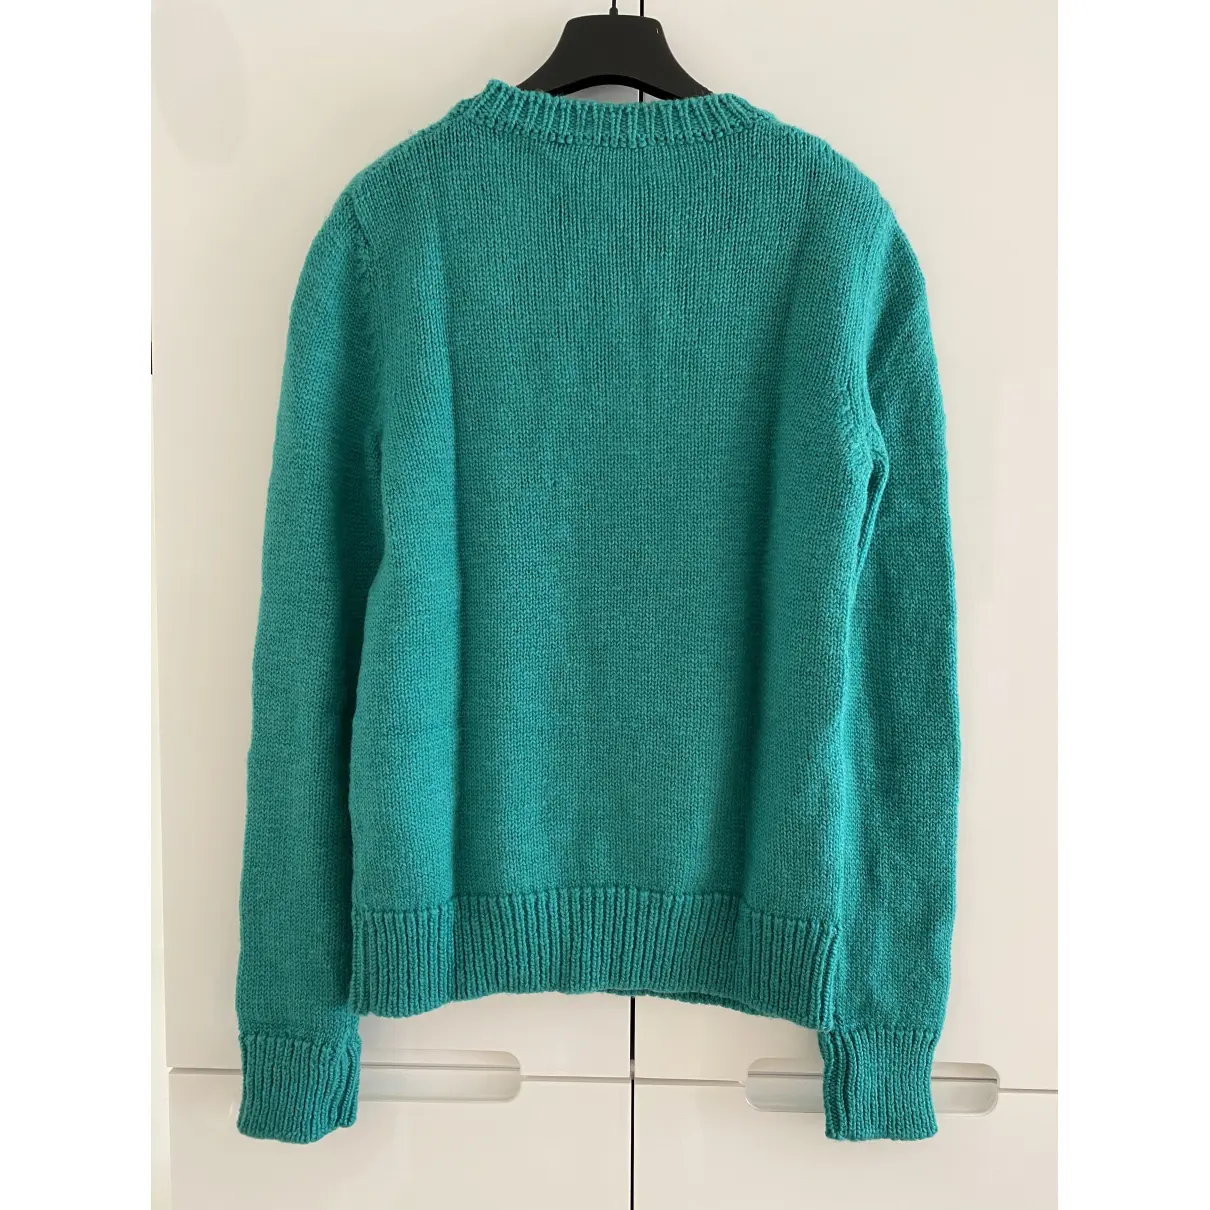 Buy Raf Simons Wool sweatshirt online